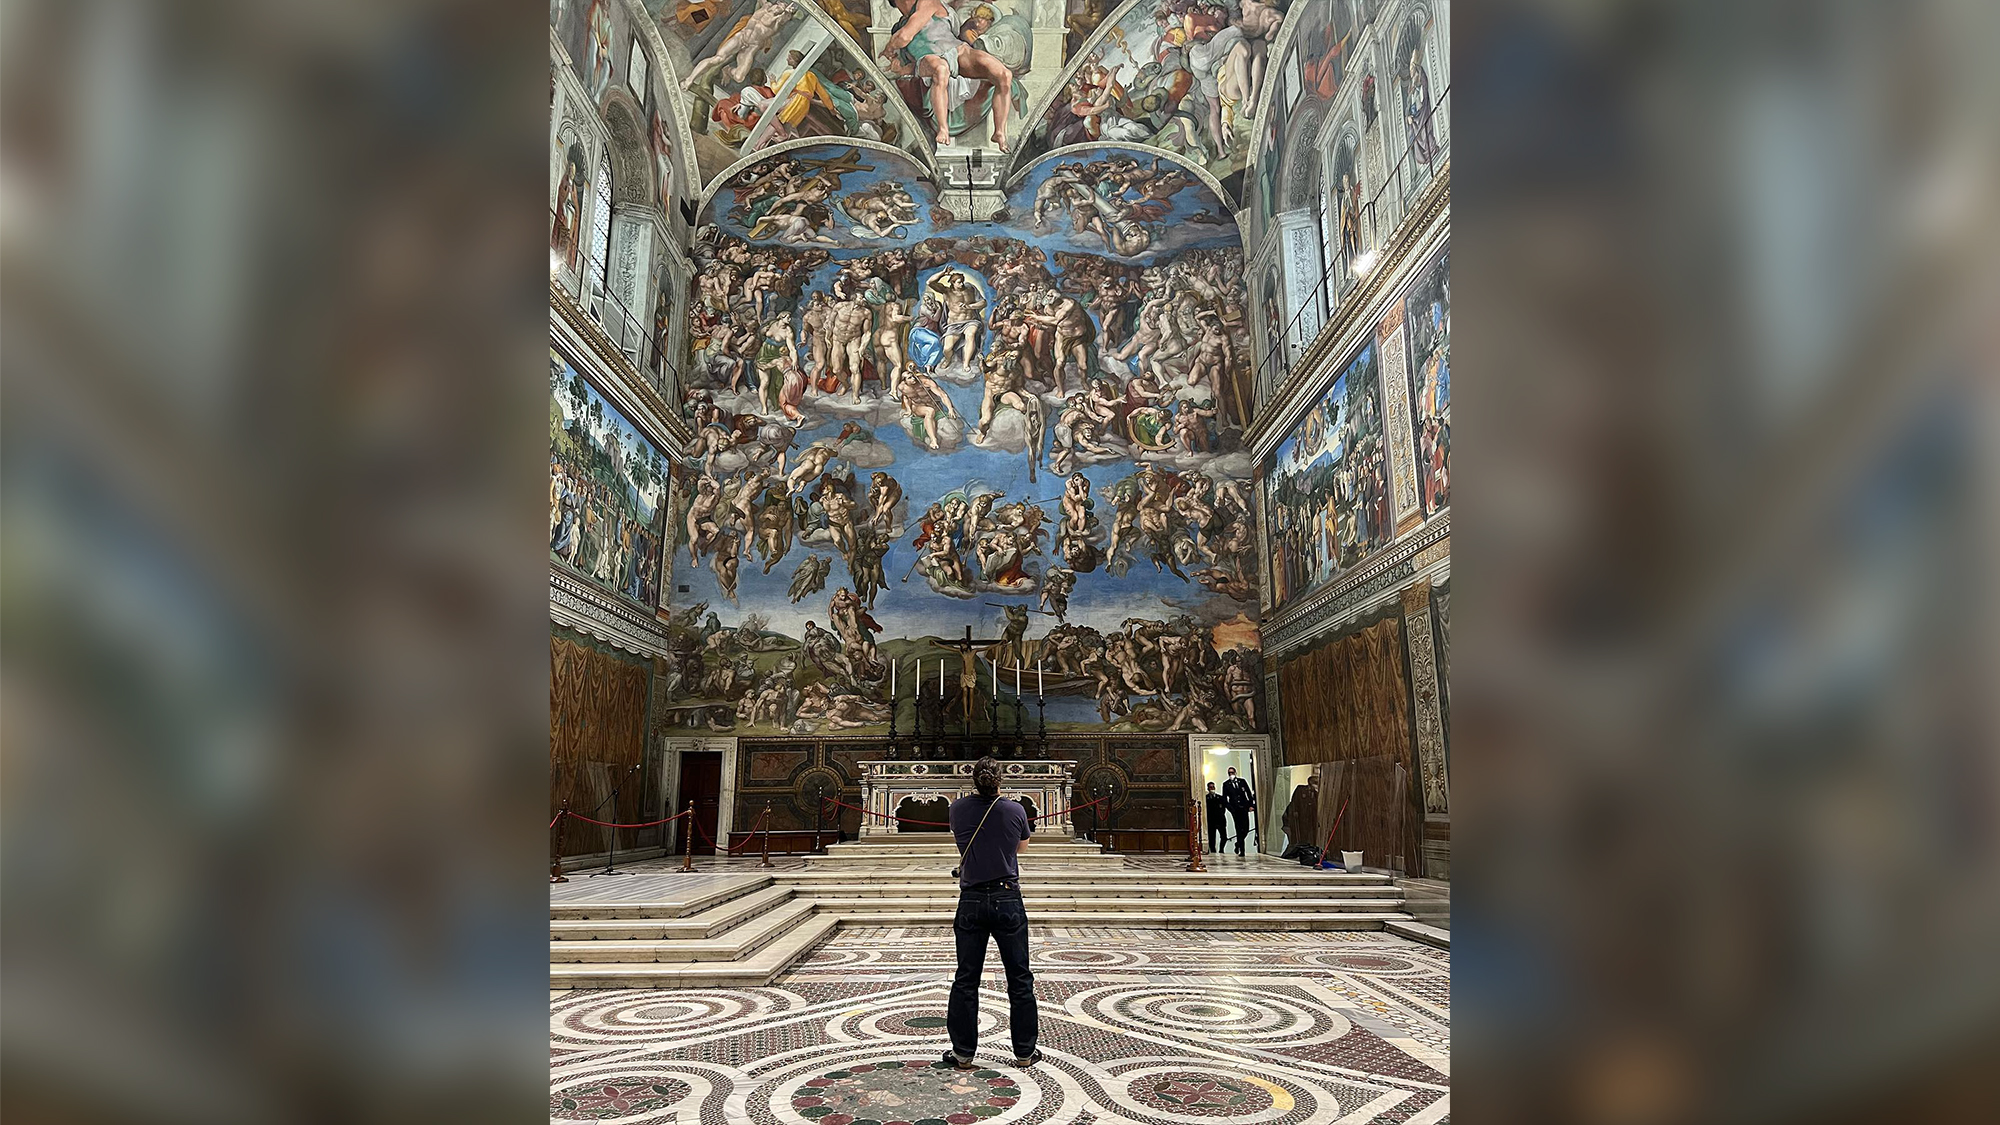 Jason Momoa apologizes after taking photos in the Sistine Chapel